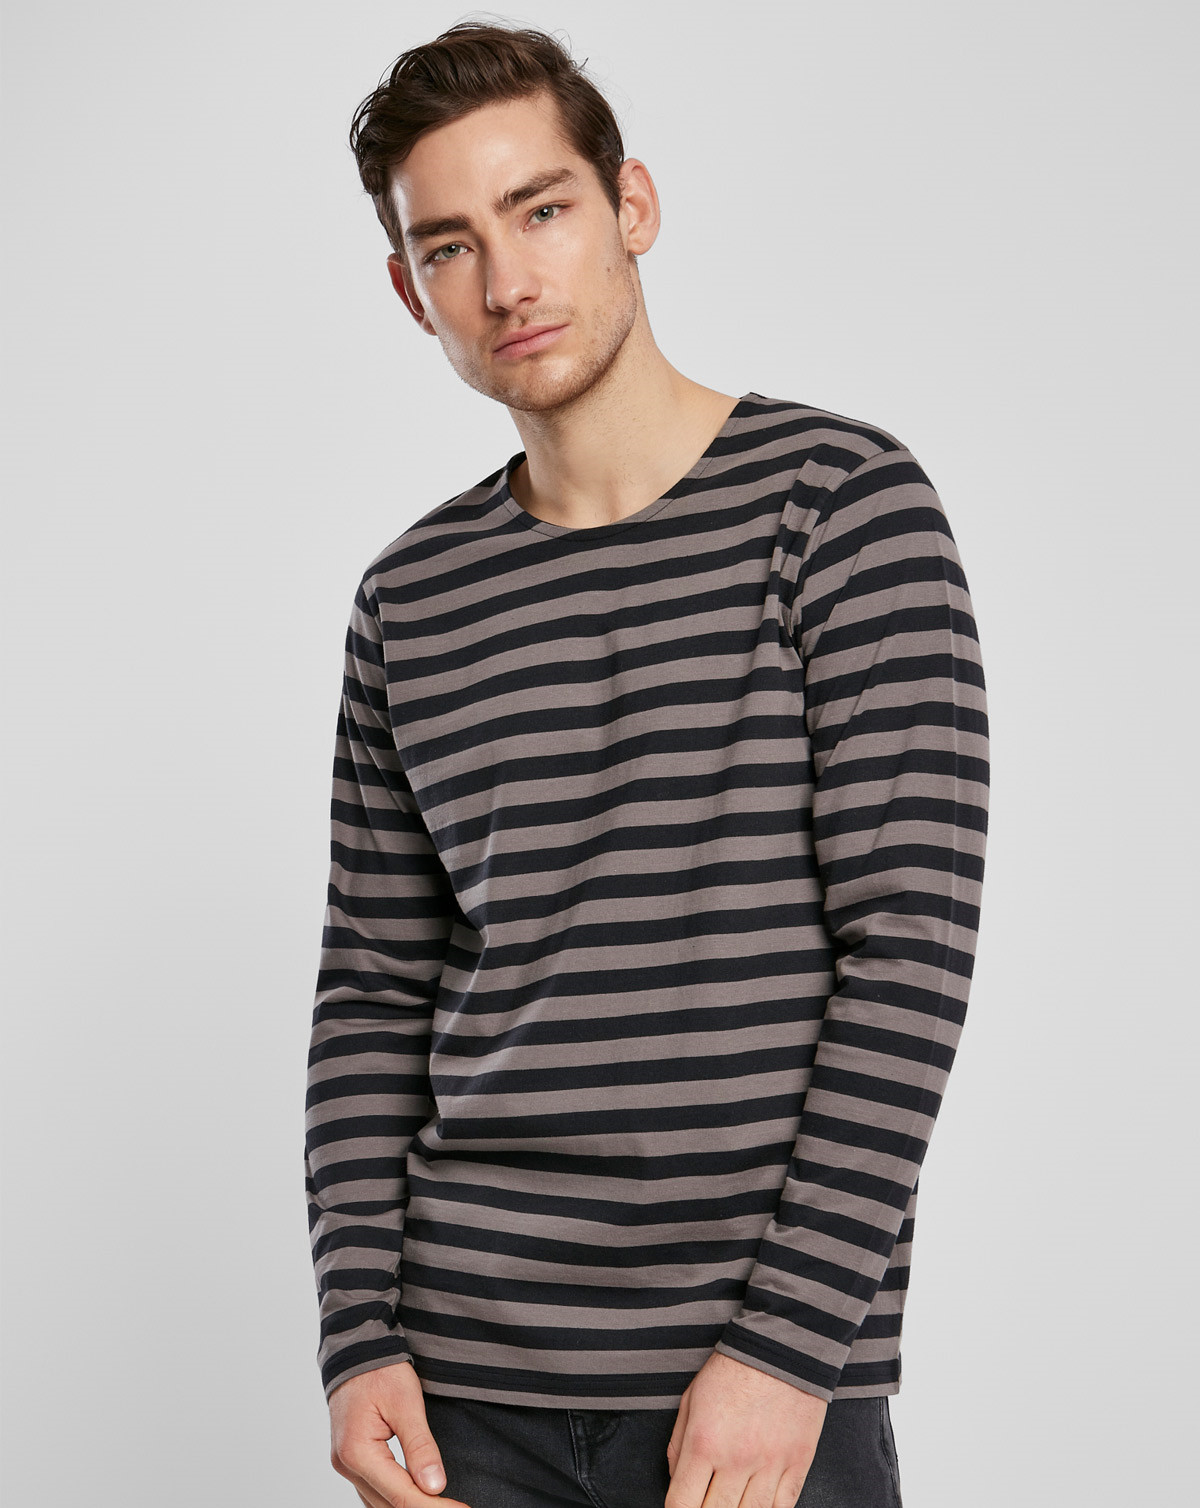 Urban Classics Regular StripeLong Sleeve T-Shirt (Asphalt / Black, S)